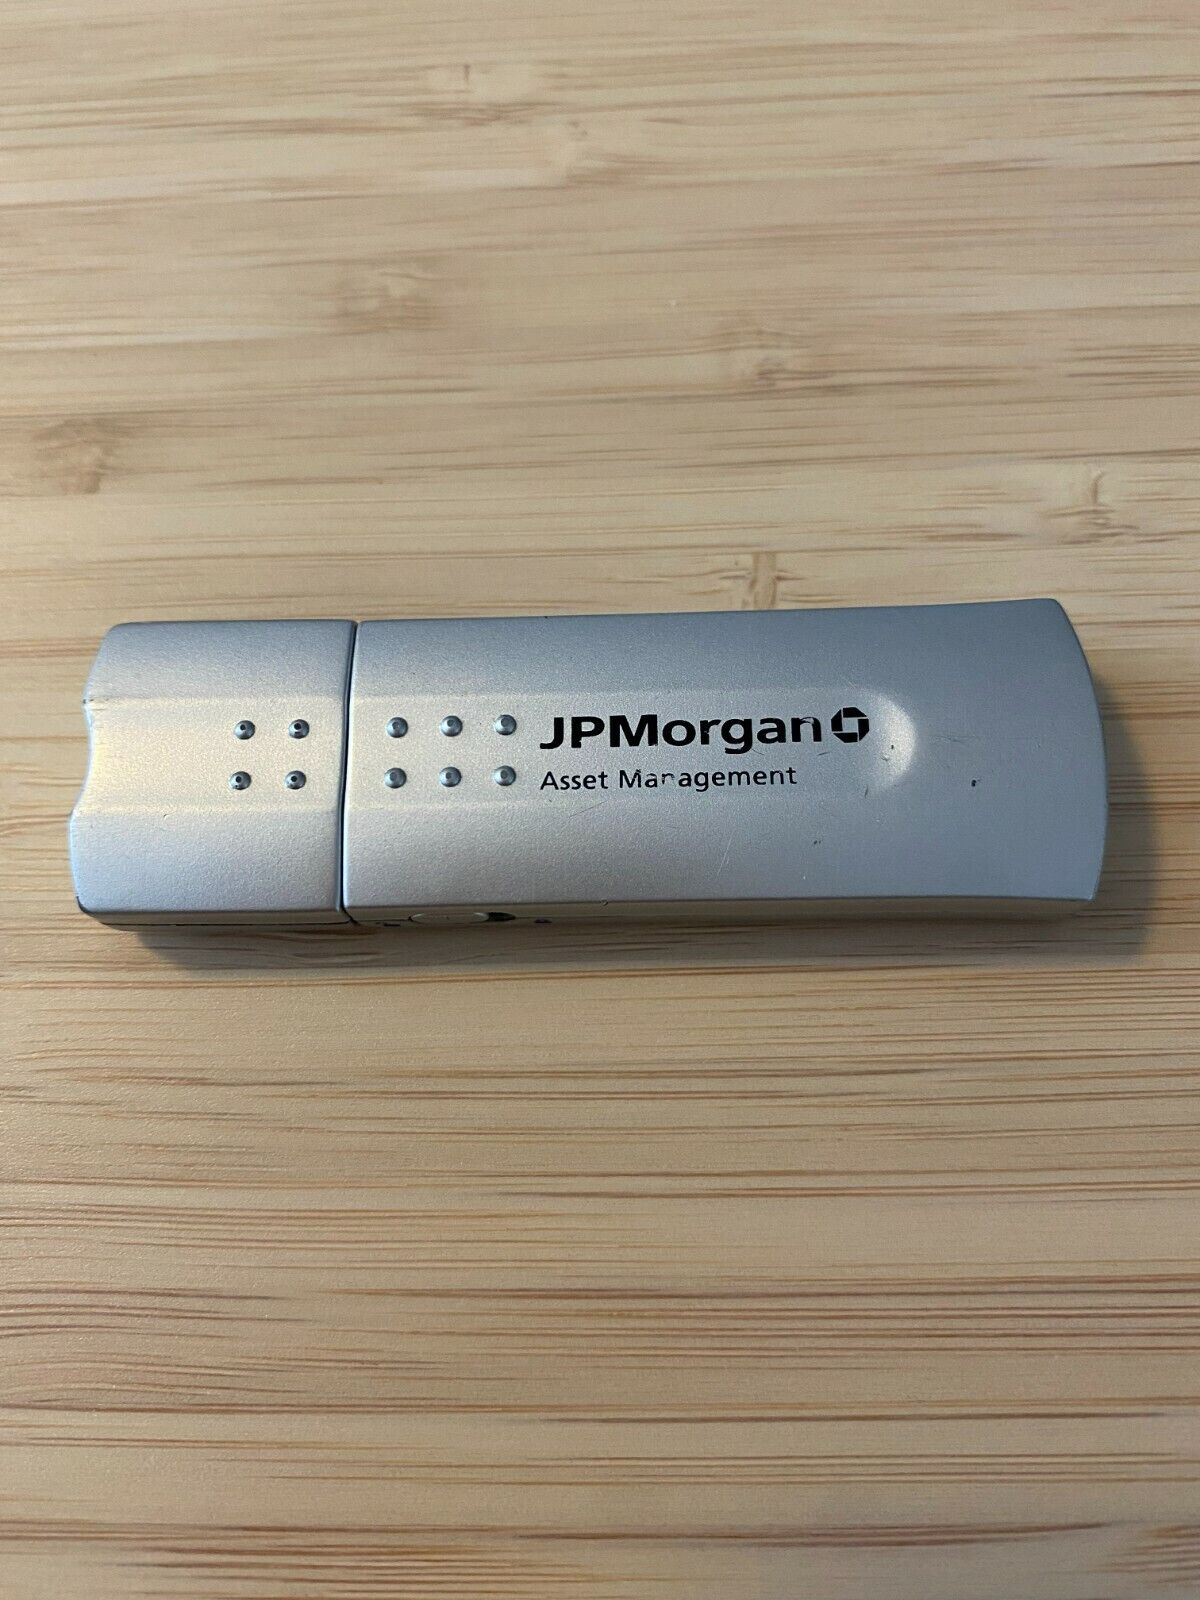 Old Vintage JPMorgan Bank Asset Management USB Flash Thumb Drive 128MB Silver